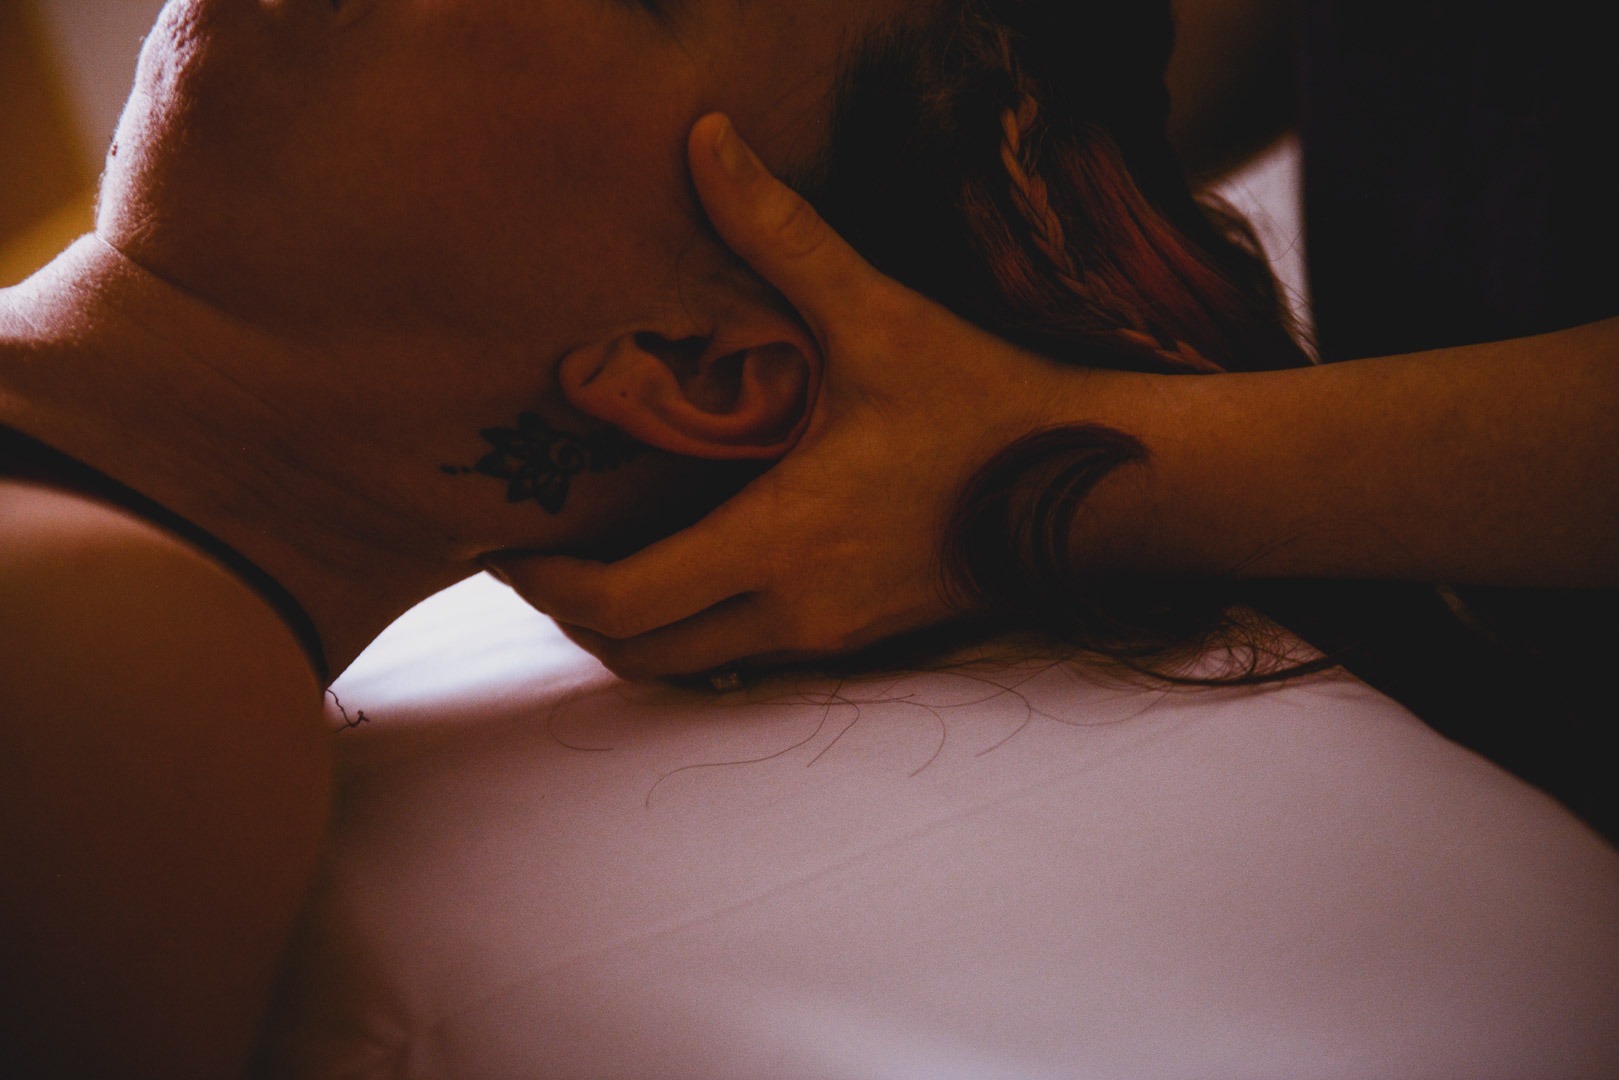 antoine devaux recommends tumblr sexy massage pic